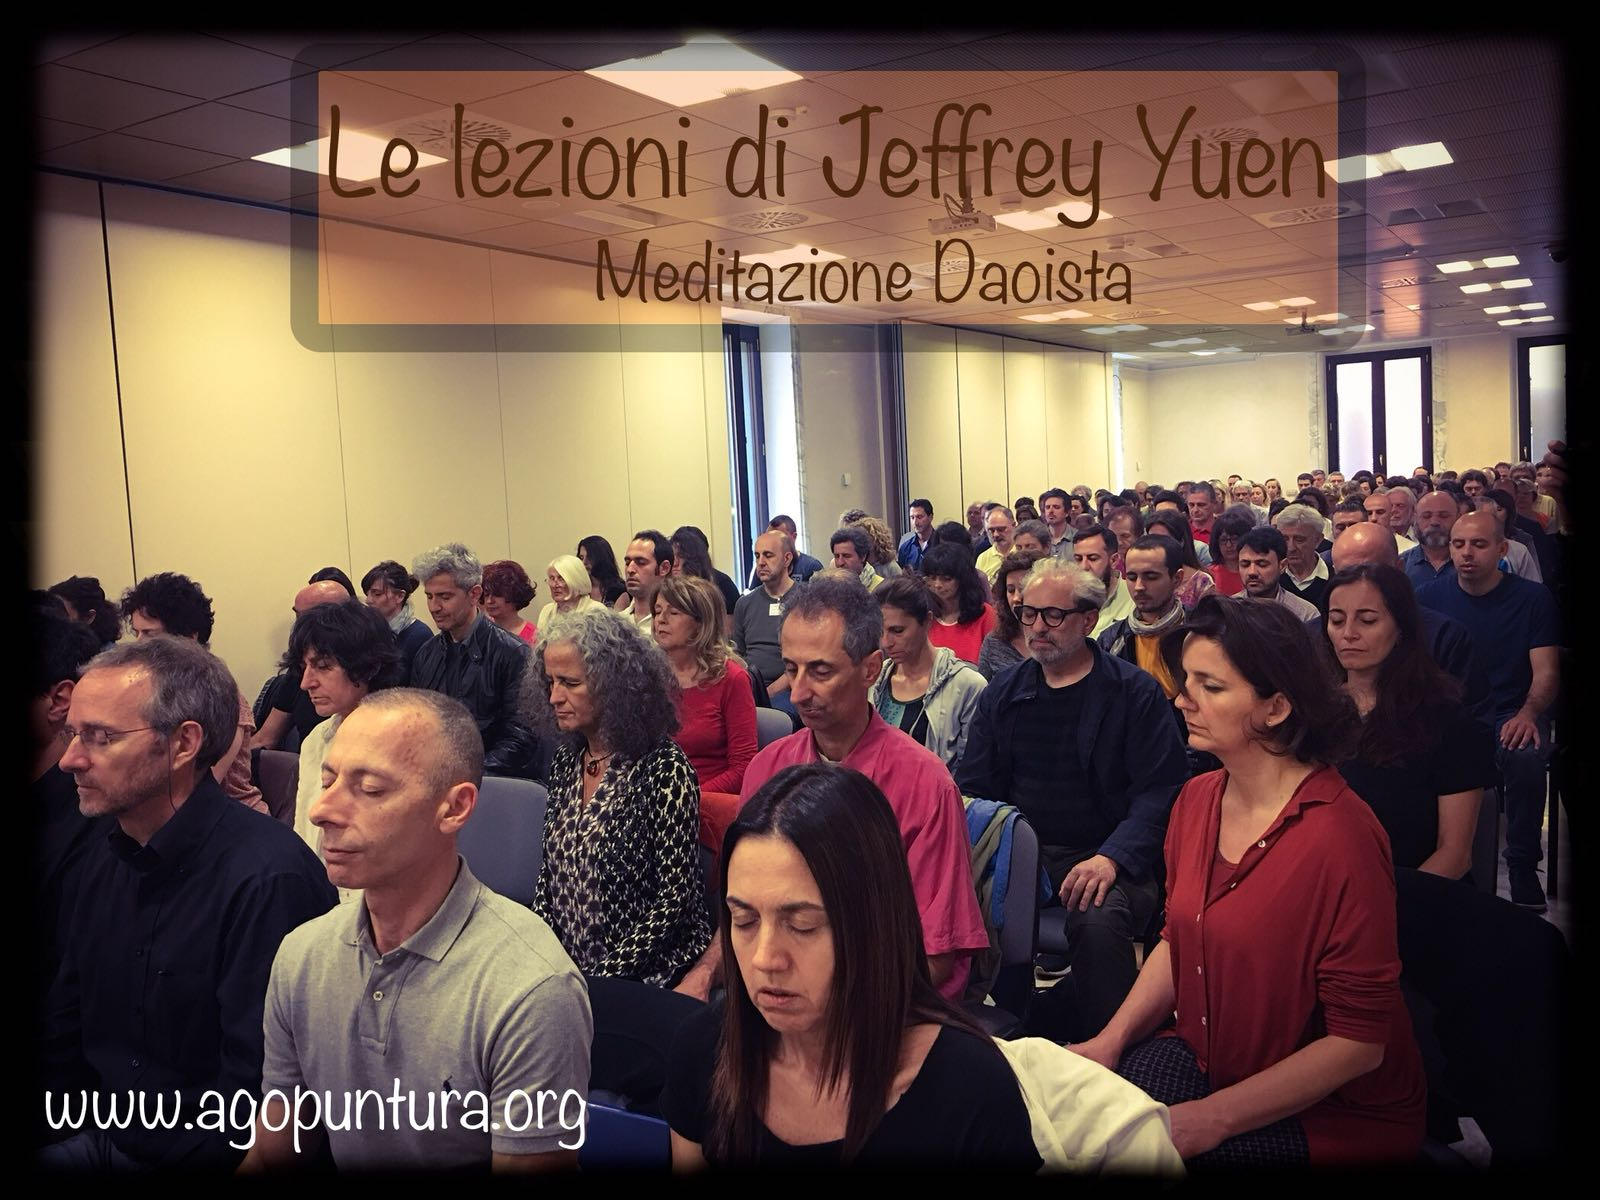 Seminari del Maestro Jeffrey Yuen 2018